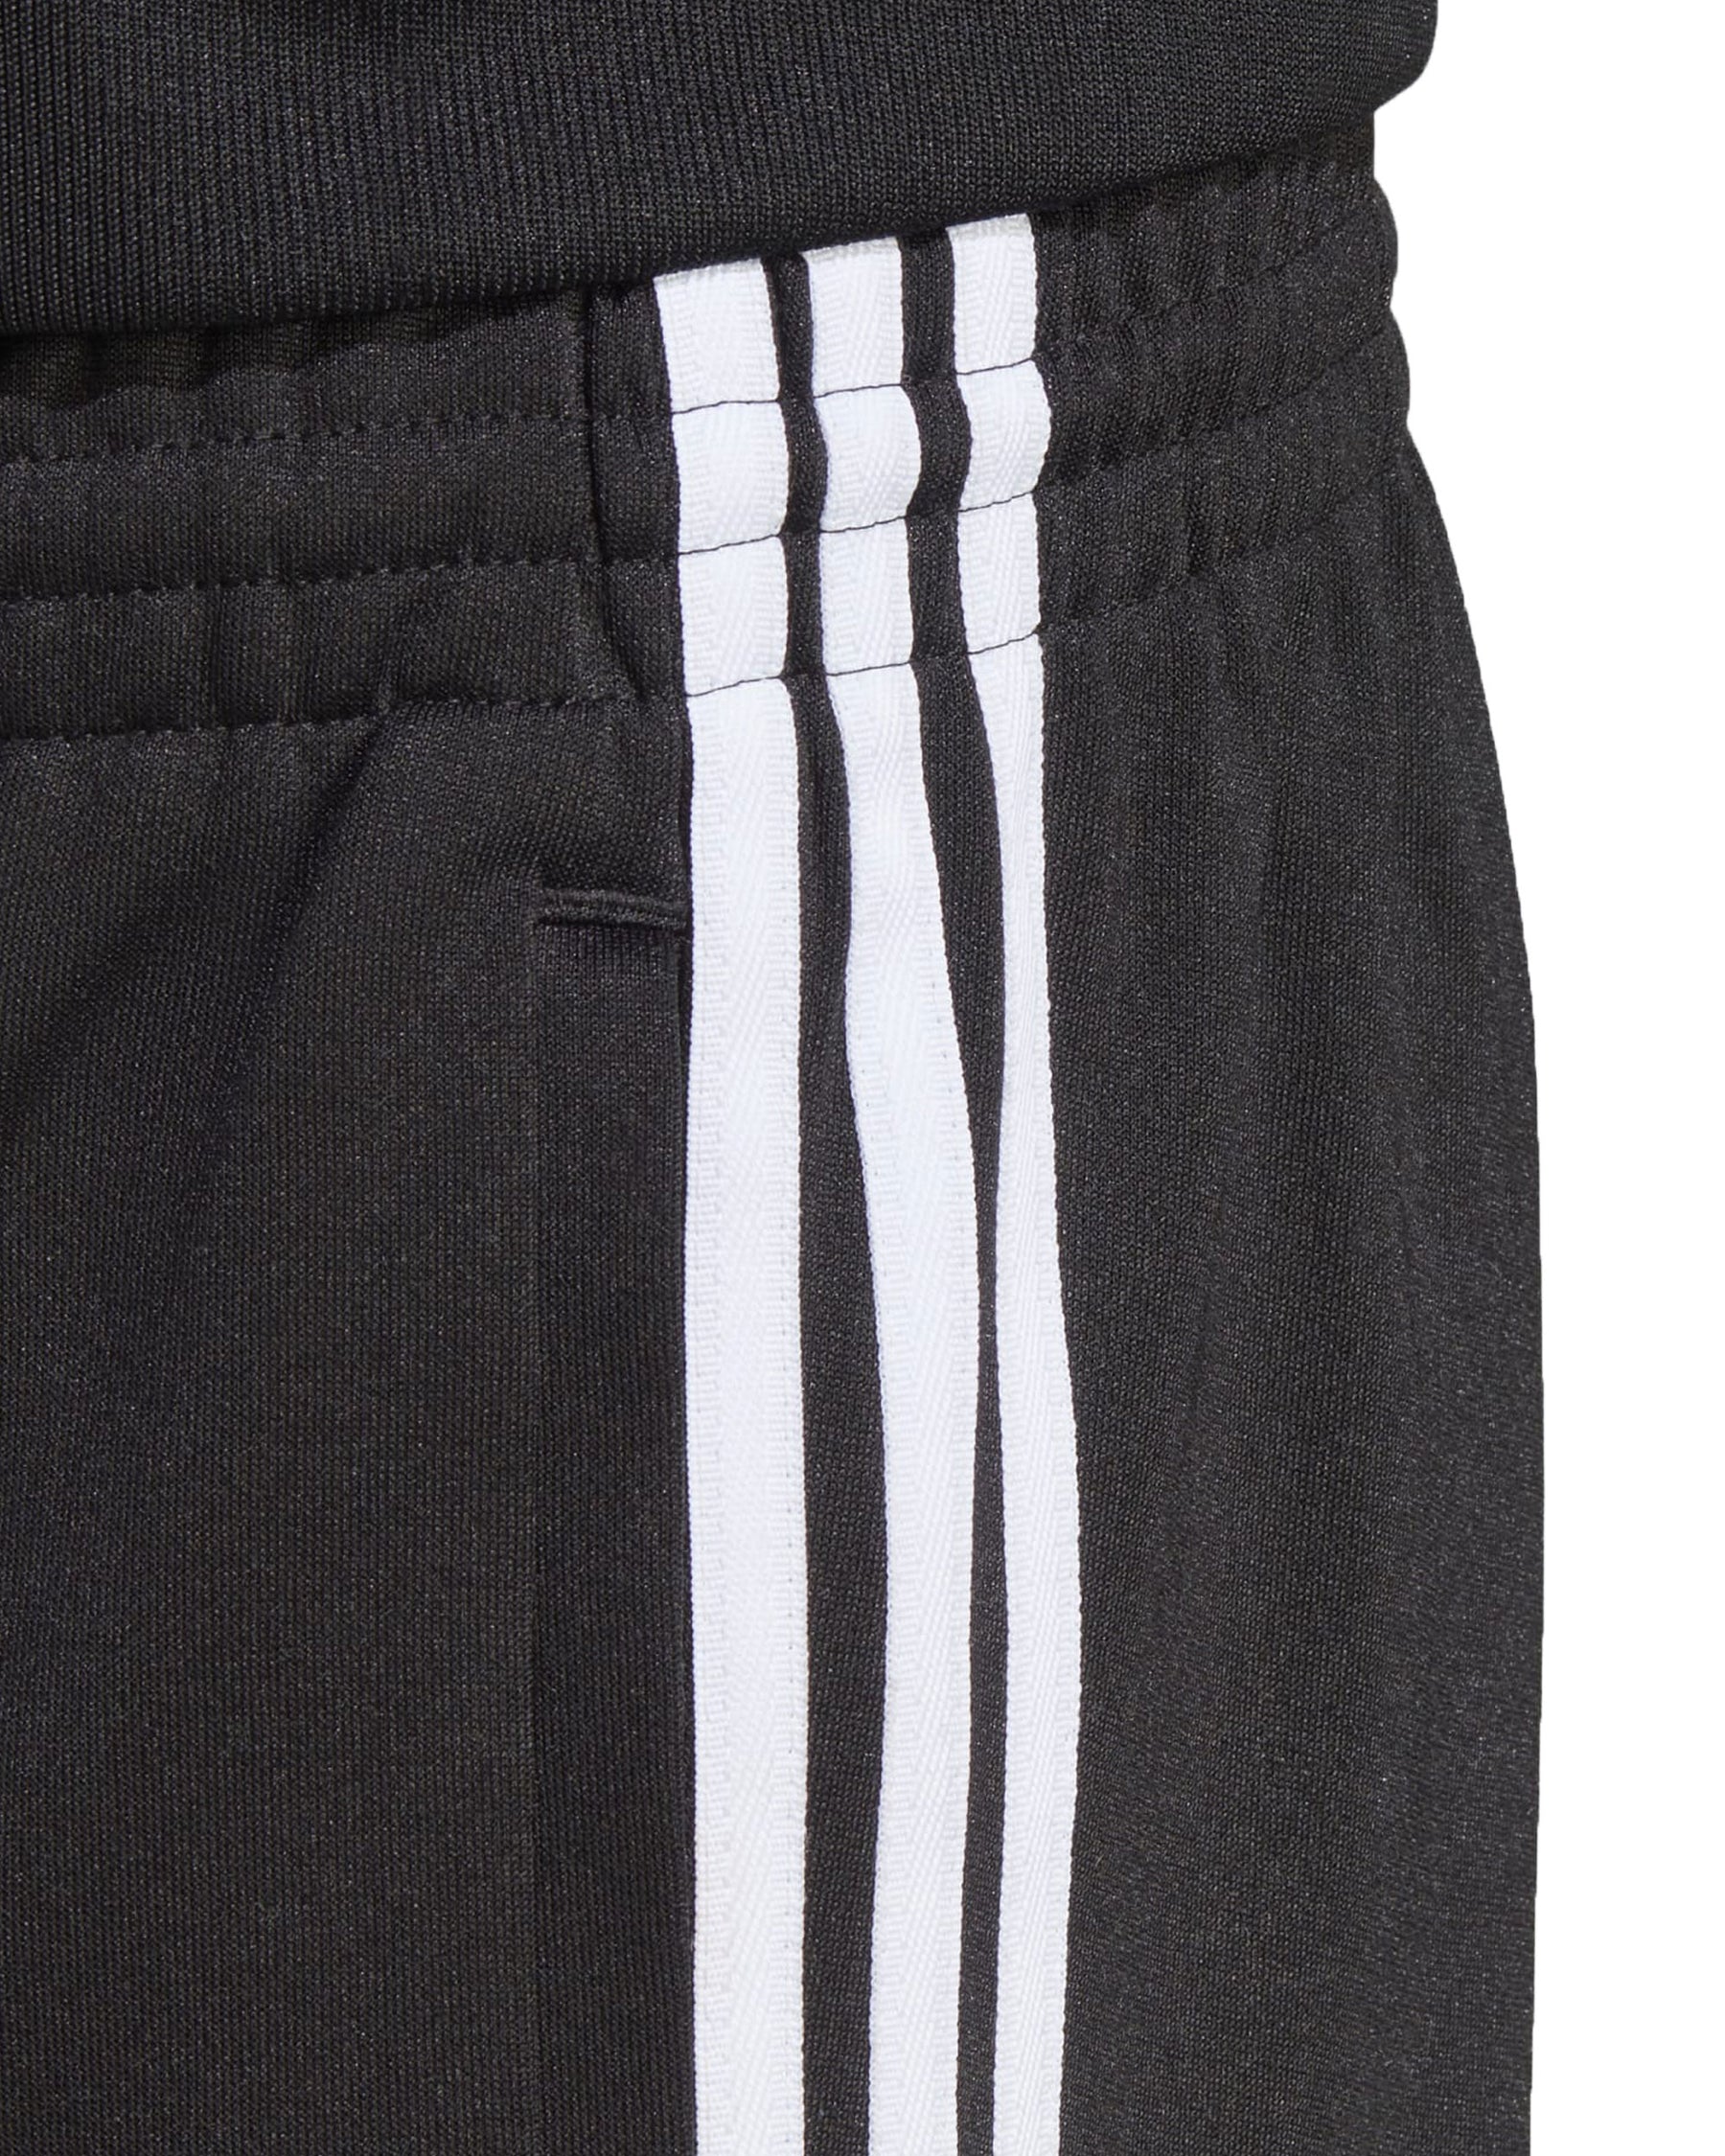 Adidas Originals Superstar Track Pant Black